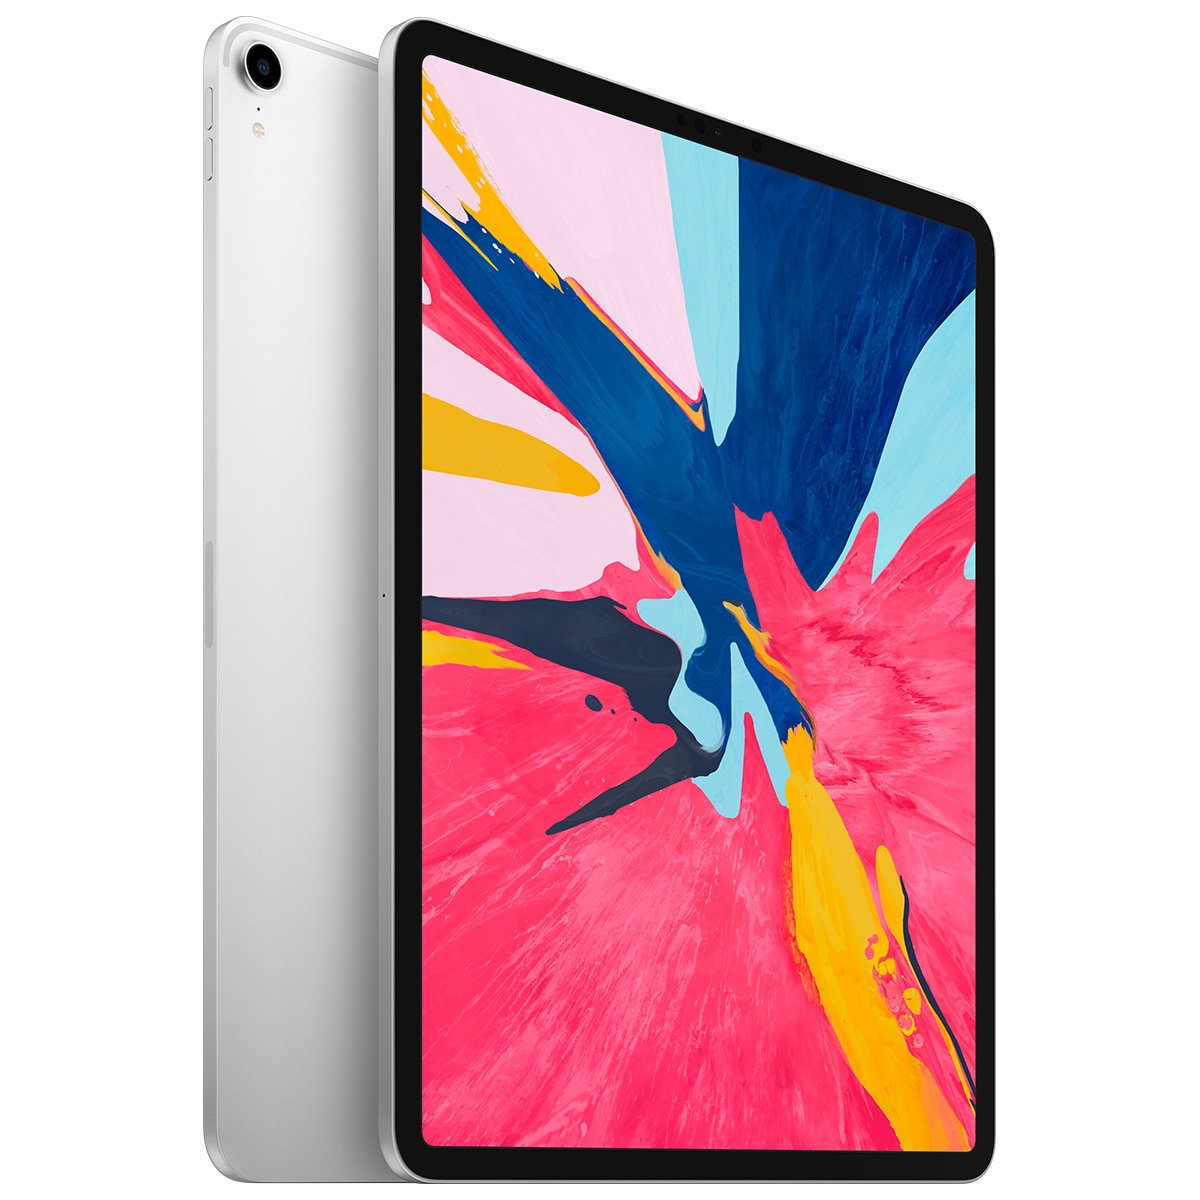 iPad Pro MTFN2X/A 12.9-inch iPad Pro Wi-Fi 256GB - Silver